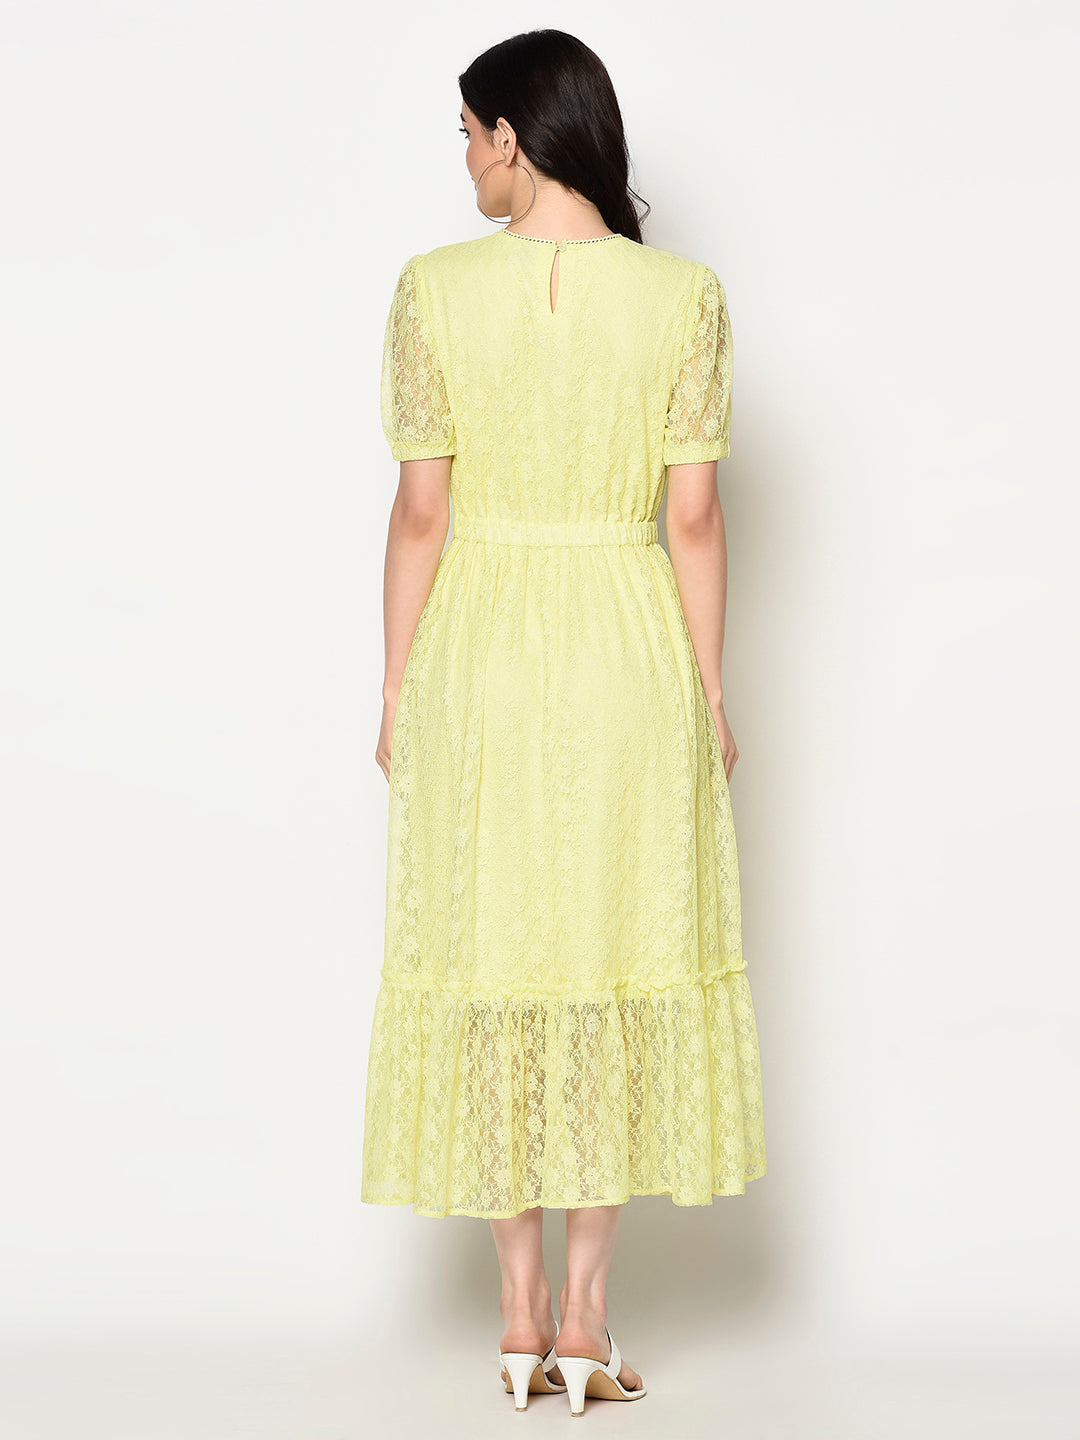 Blanc9 Yellow Laced Dress